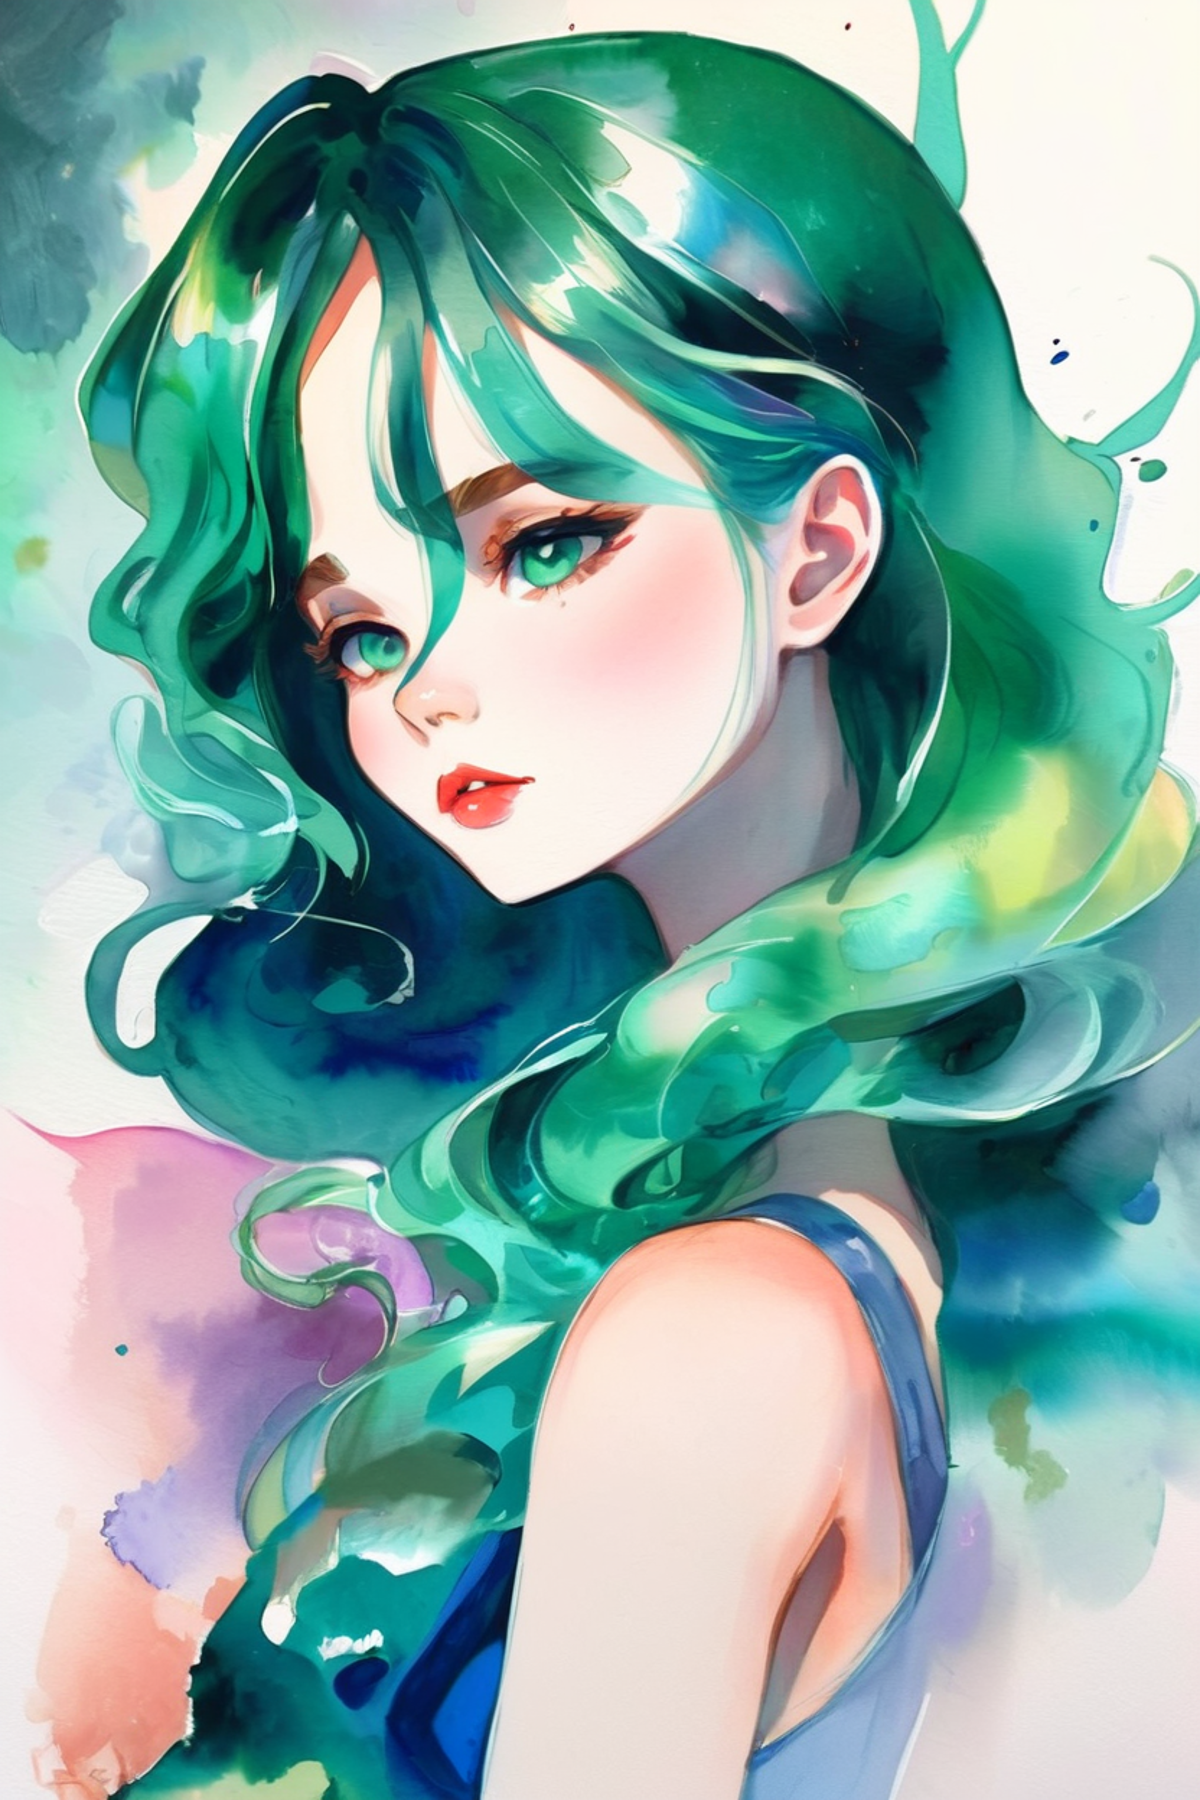 Envy Anime Watercolor XL 01 image by _Envy_